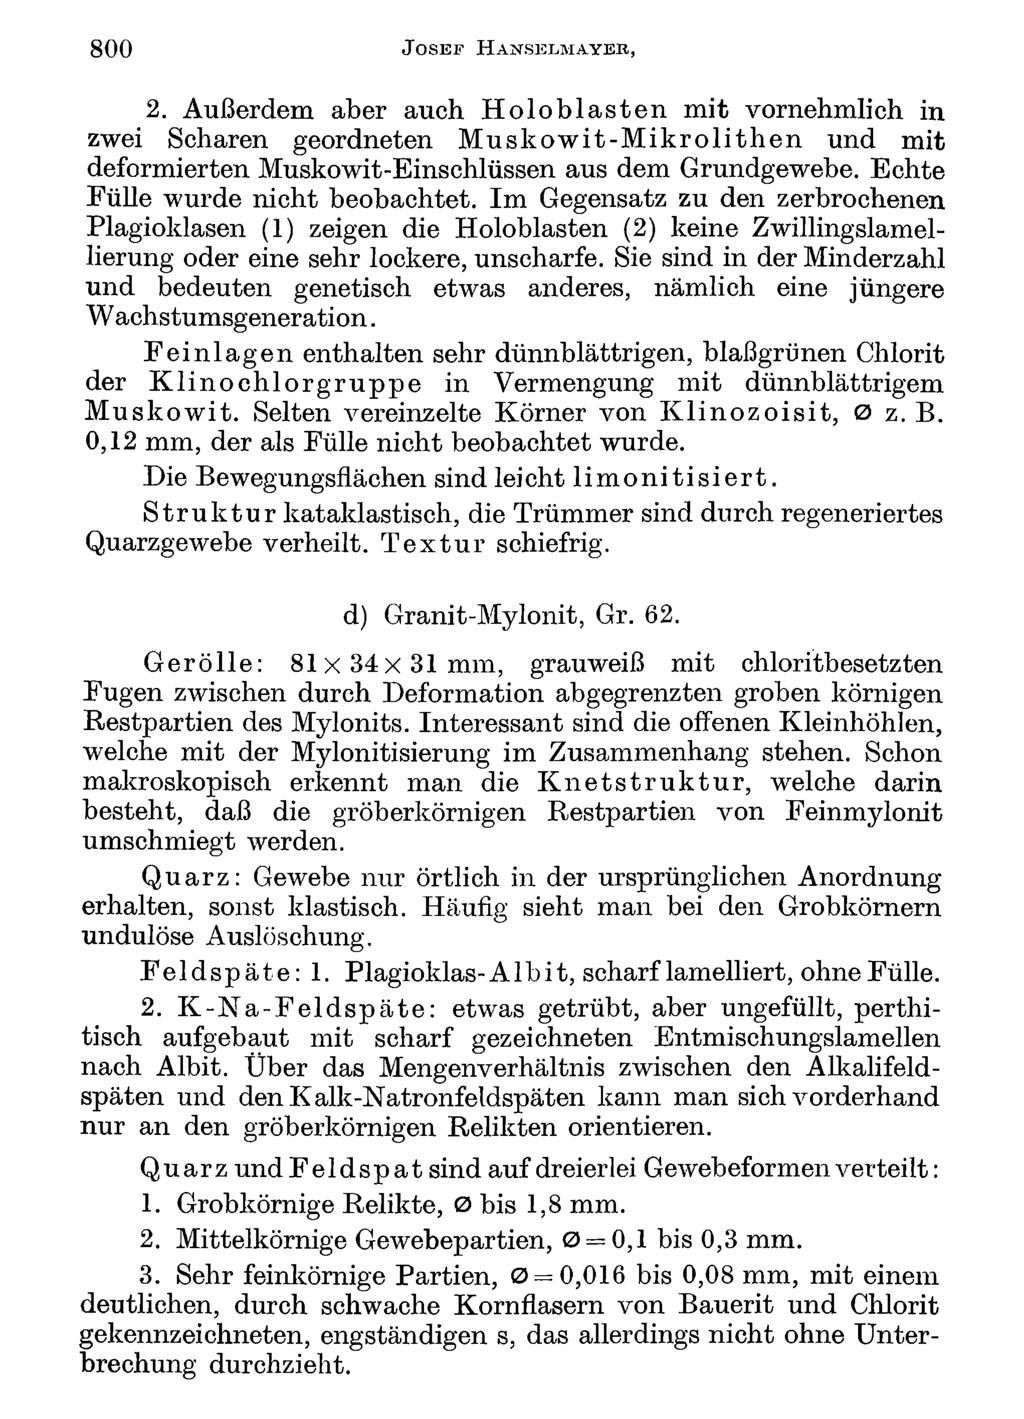 800 J o s e f H a n s e l m a y e b, Akademie d. Wissenschaften Wien; download unter www.biologiezentrum.at 2.